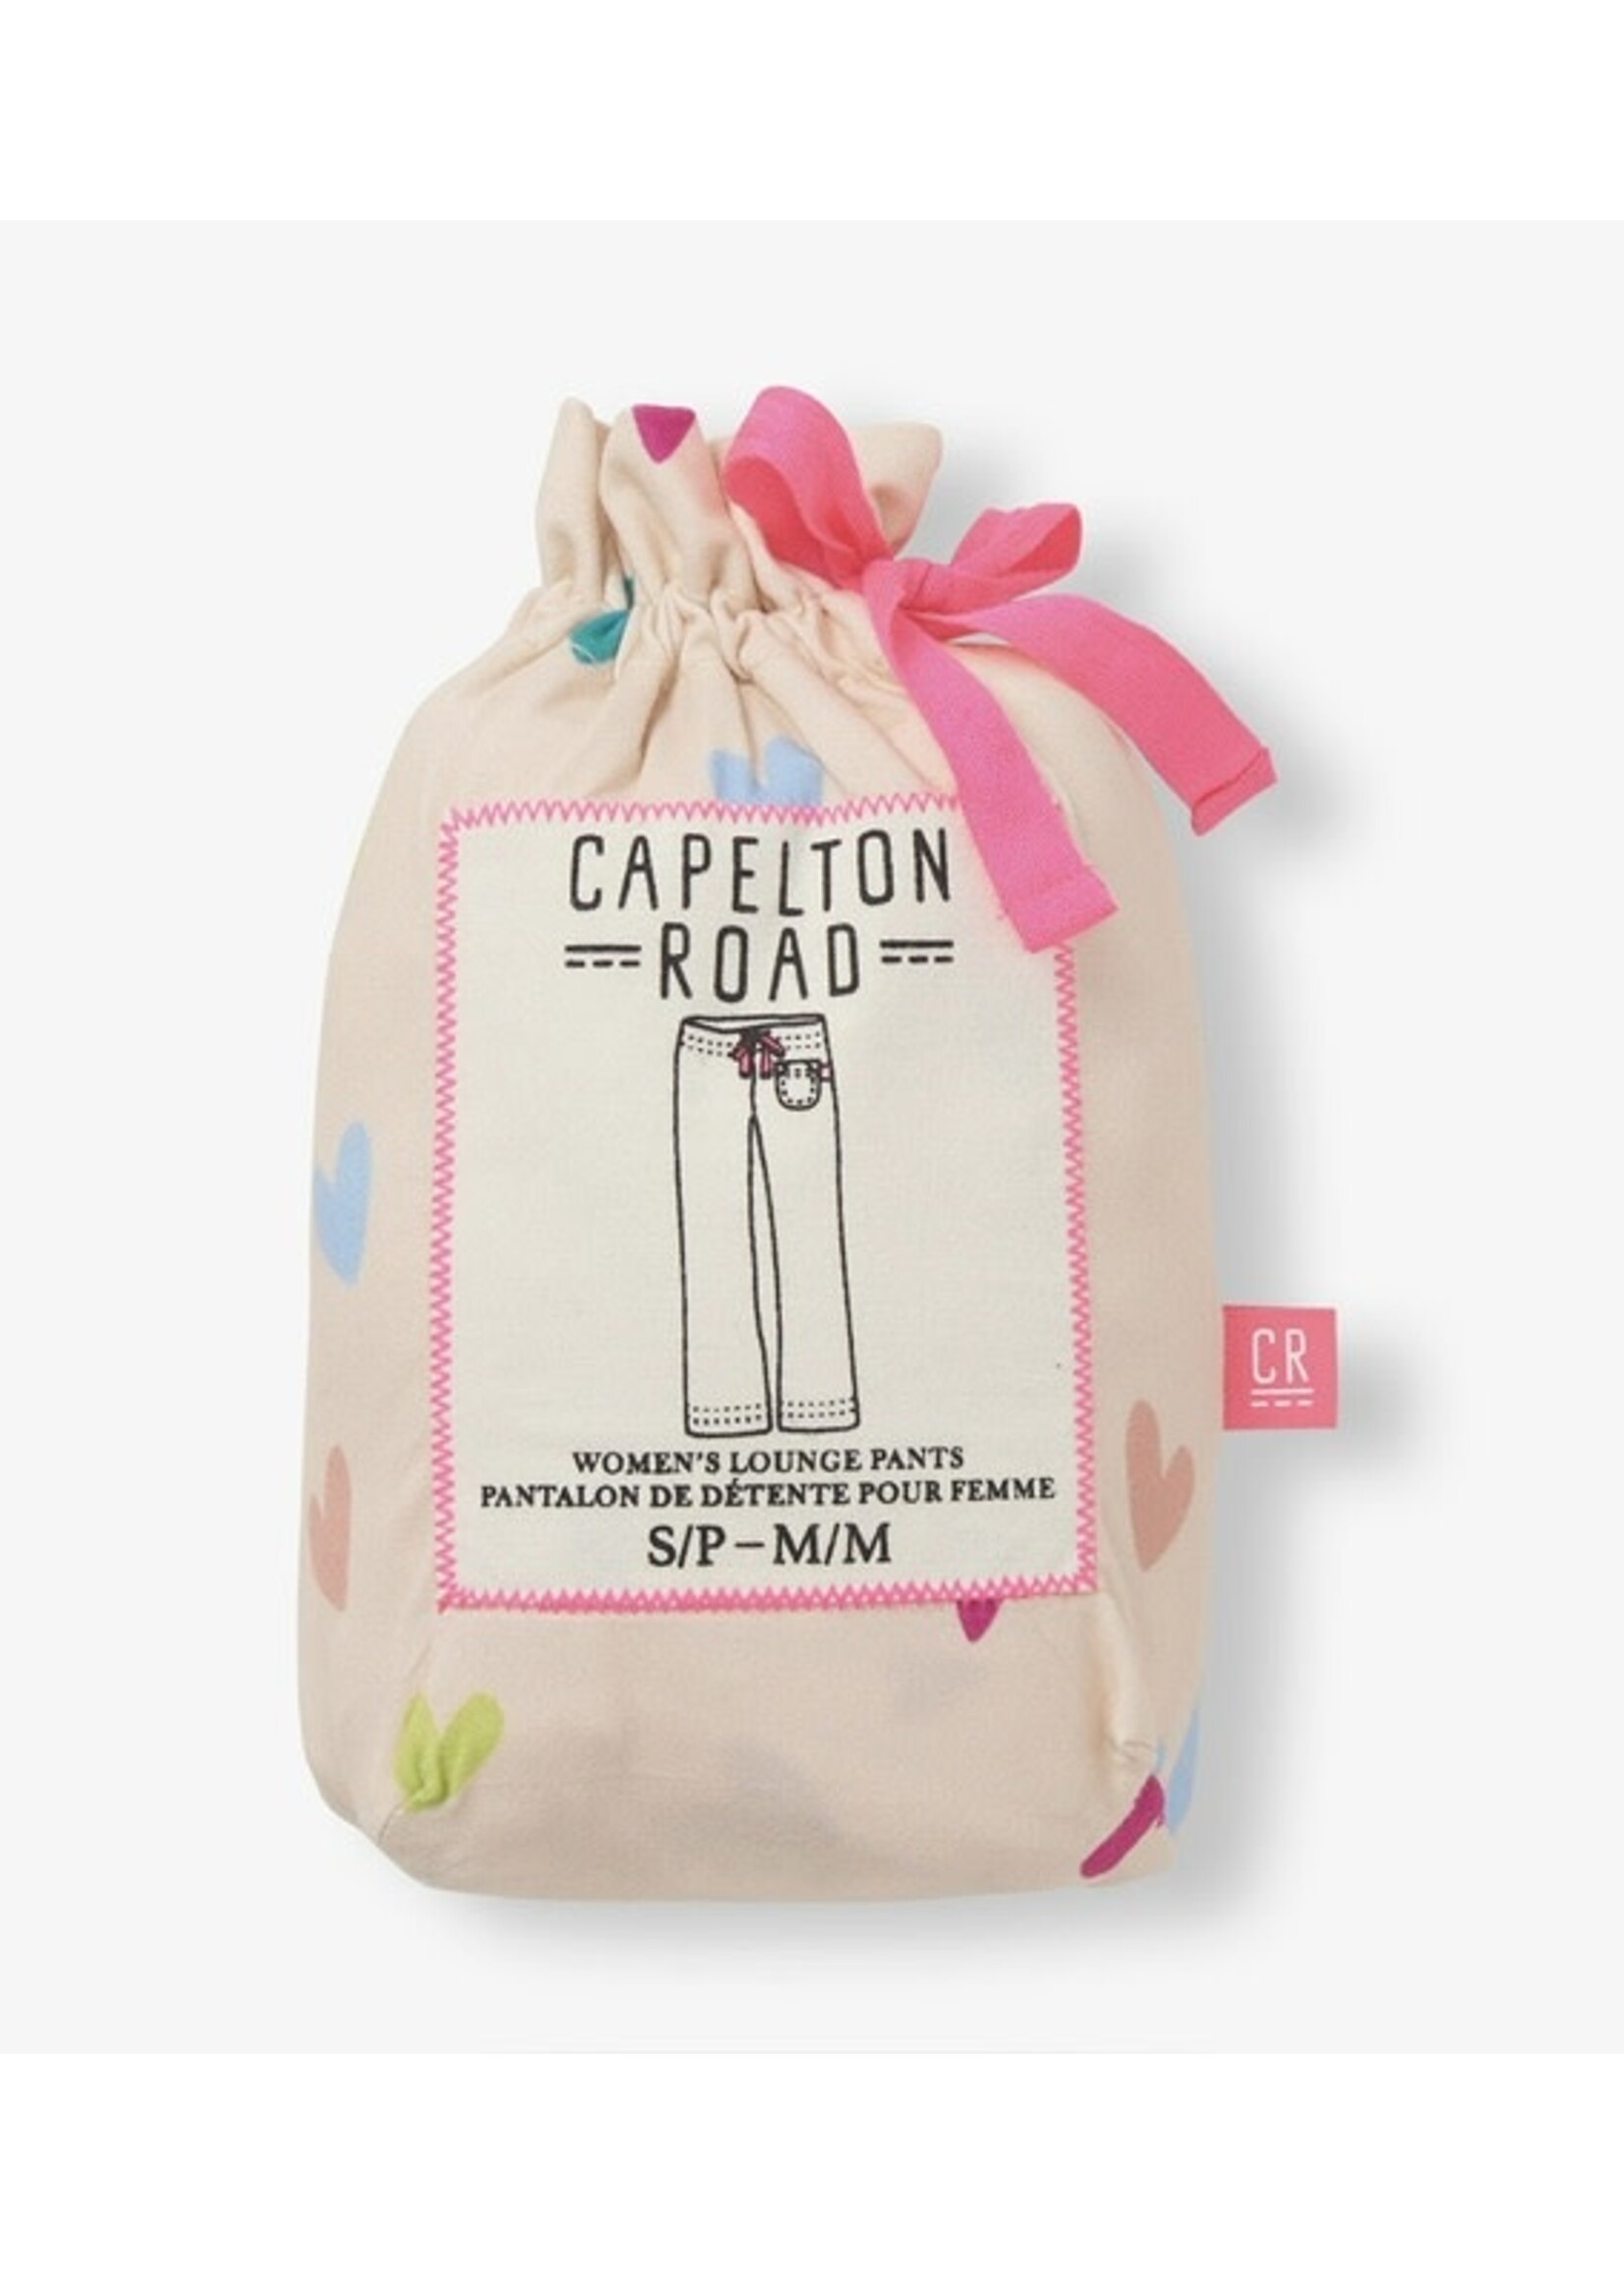 Capleton Road Jelly Bean Hearts PJ Pants in a Bag